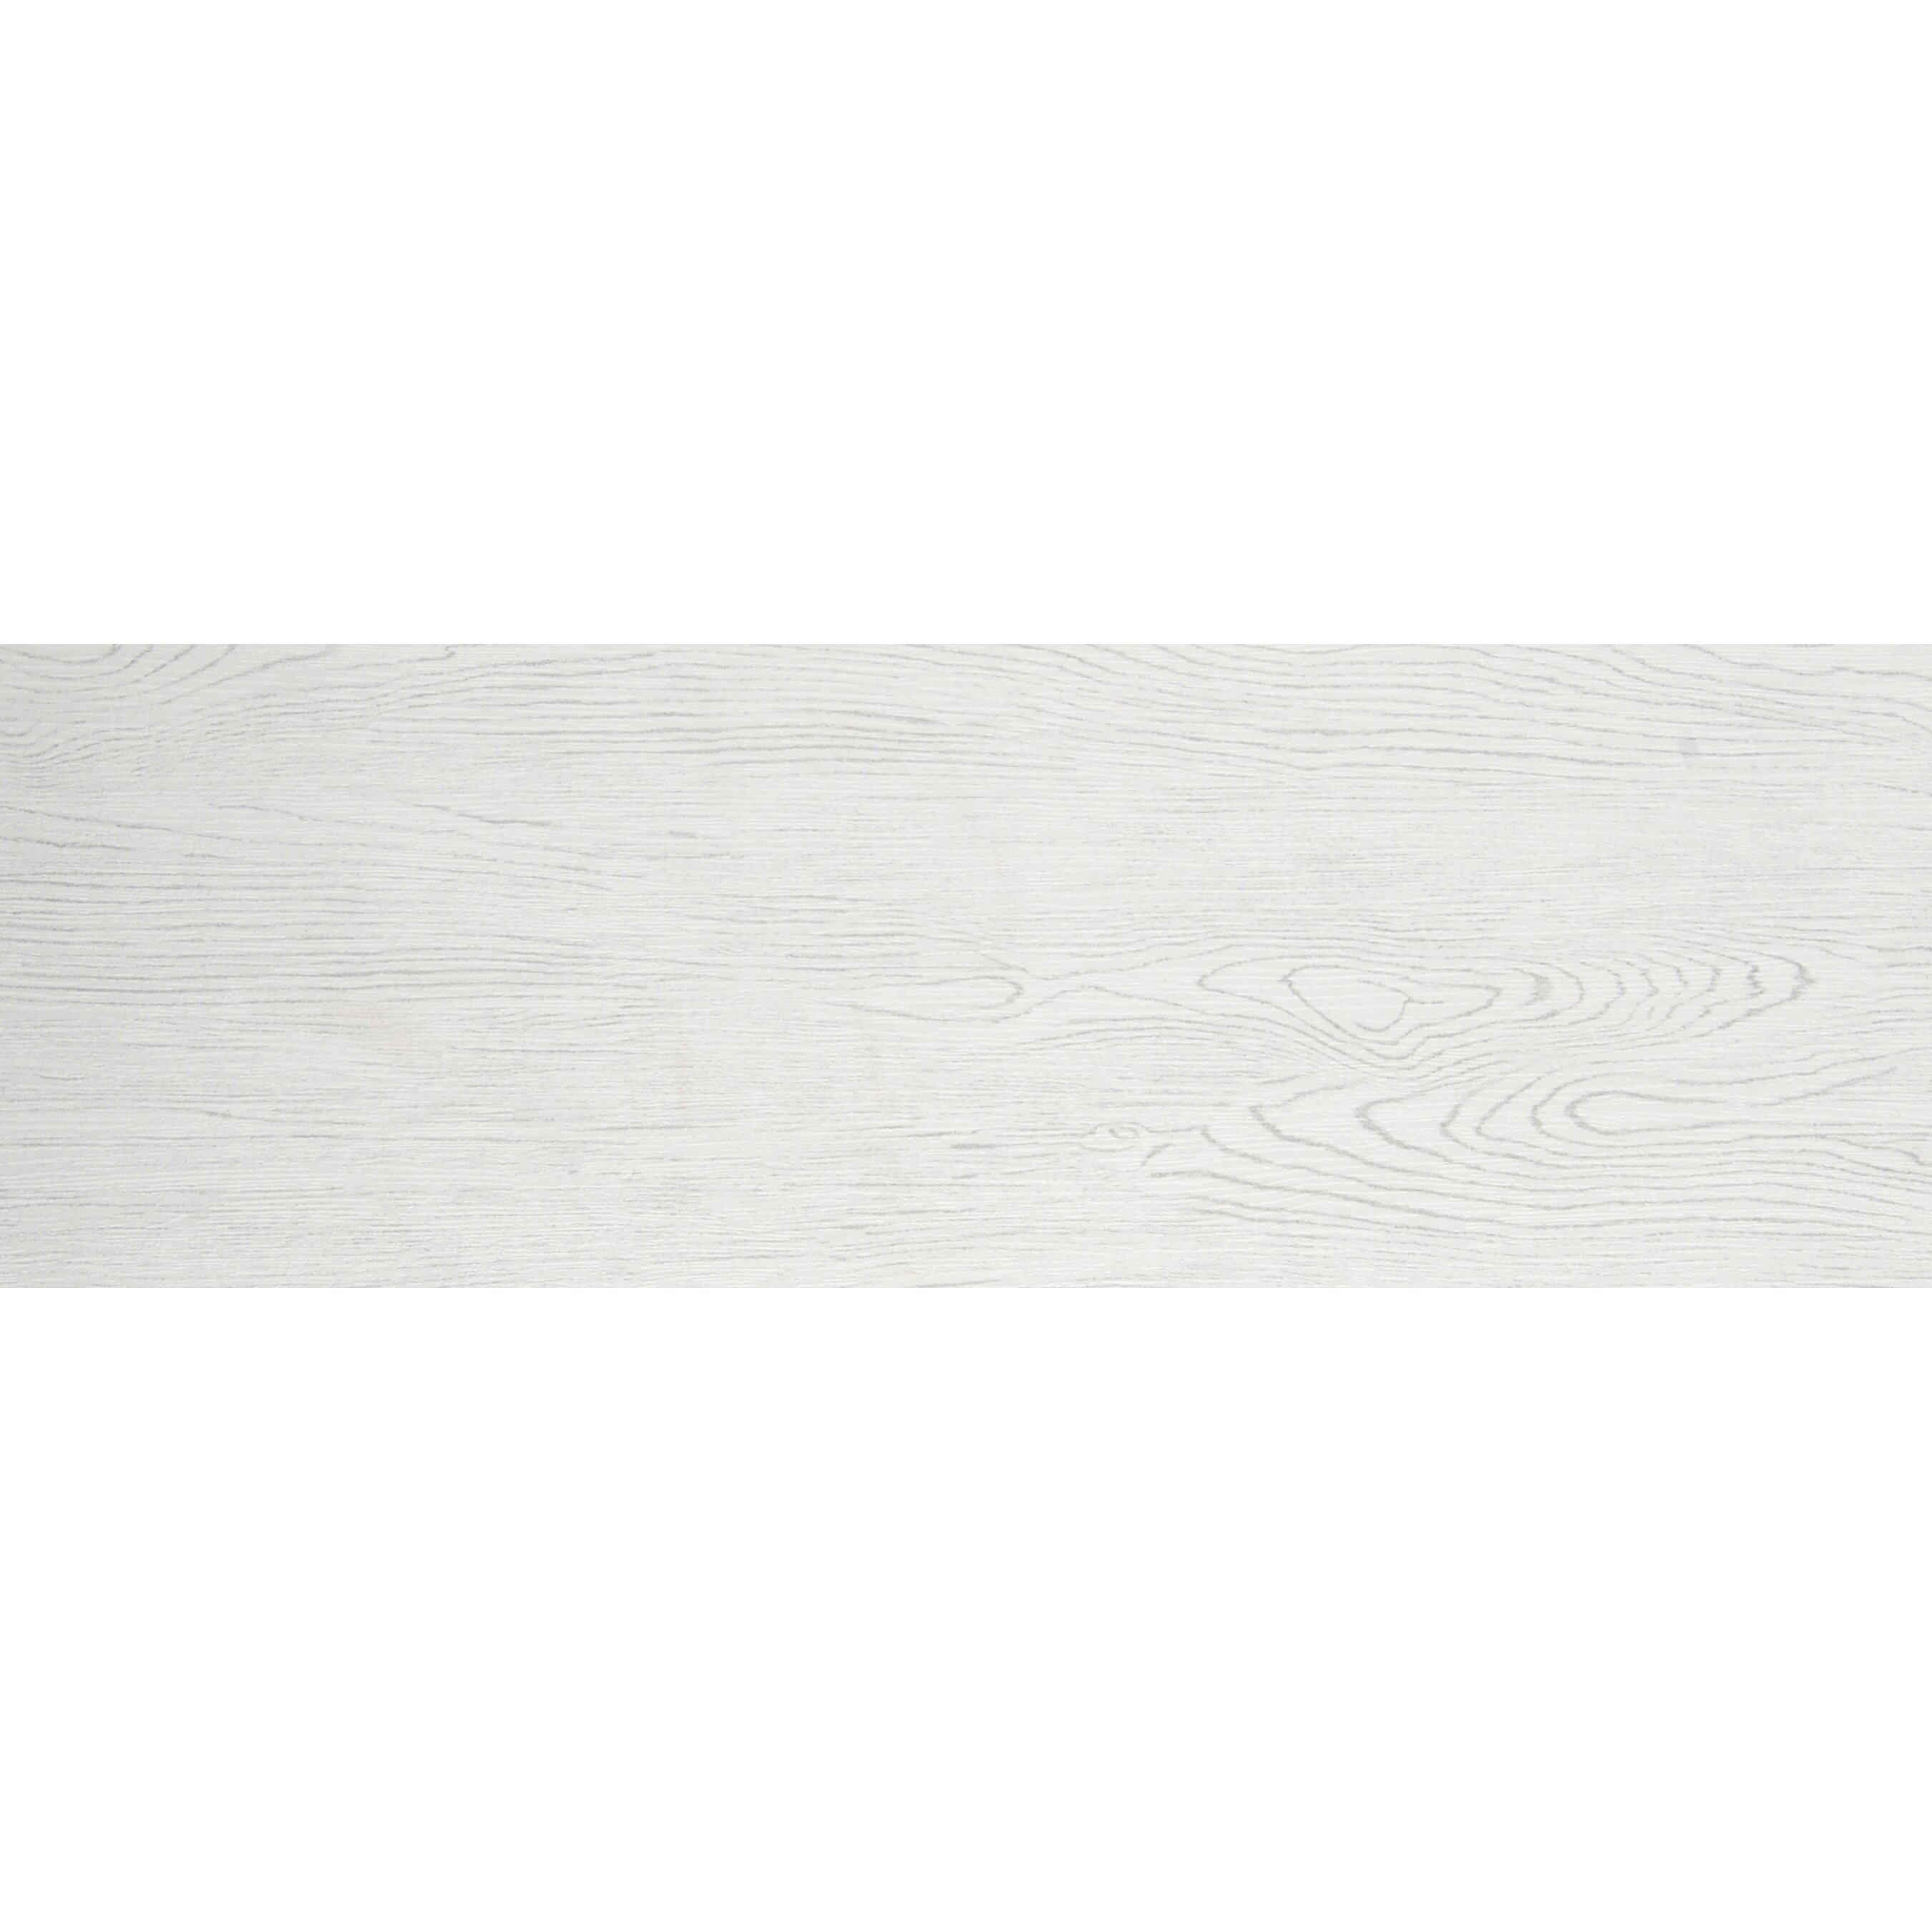 Emser Tile Alpine 12" x 36" Porcelain Field Tile in White & Reviews